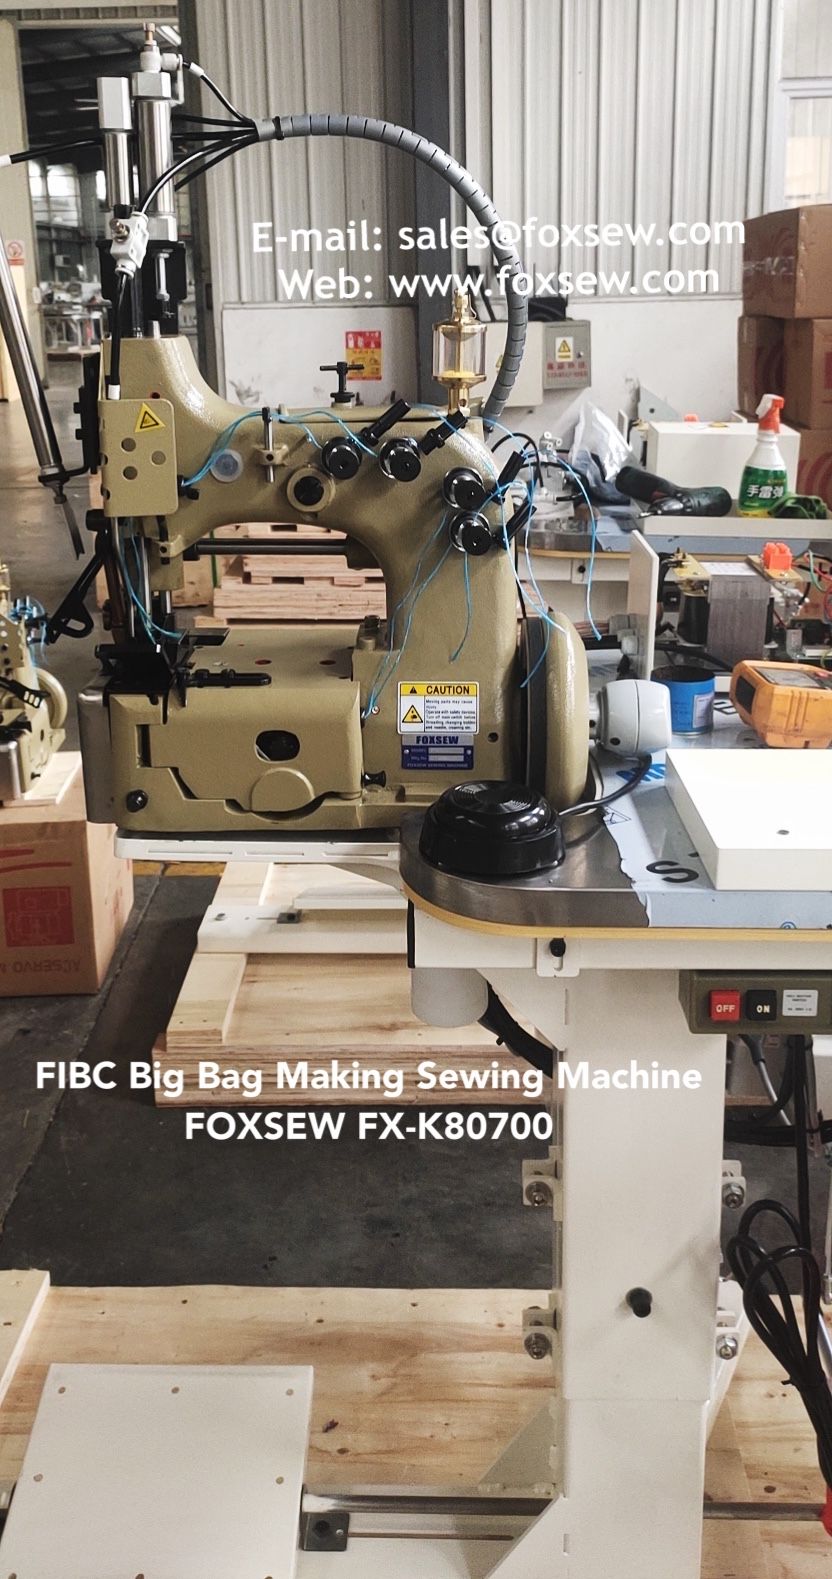 Fibc Big Bag Making Sewing Machine Foxsew Fx K80700 Jpg